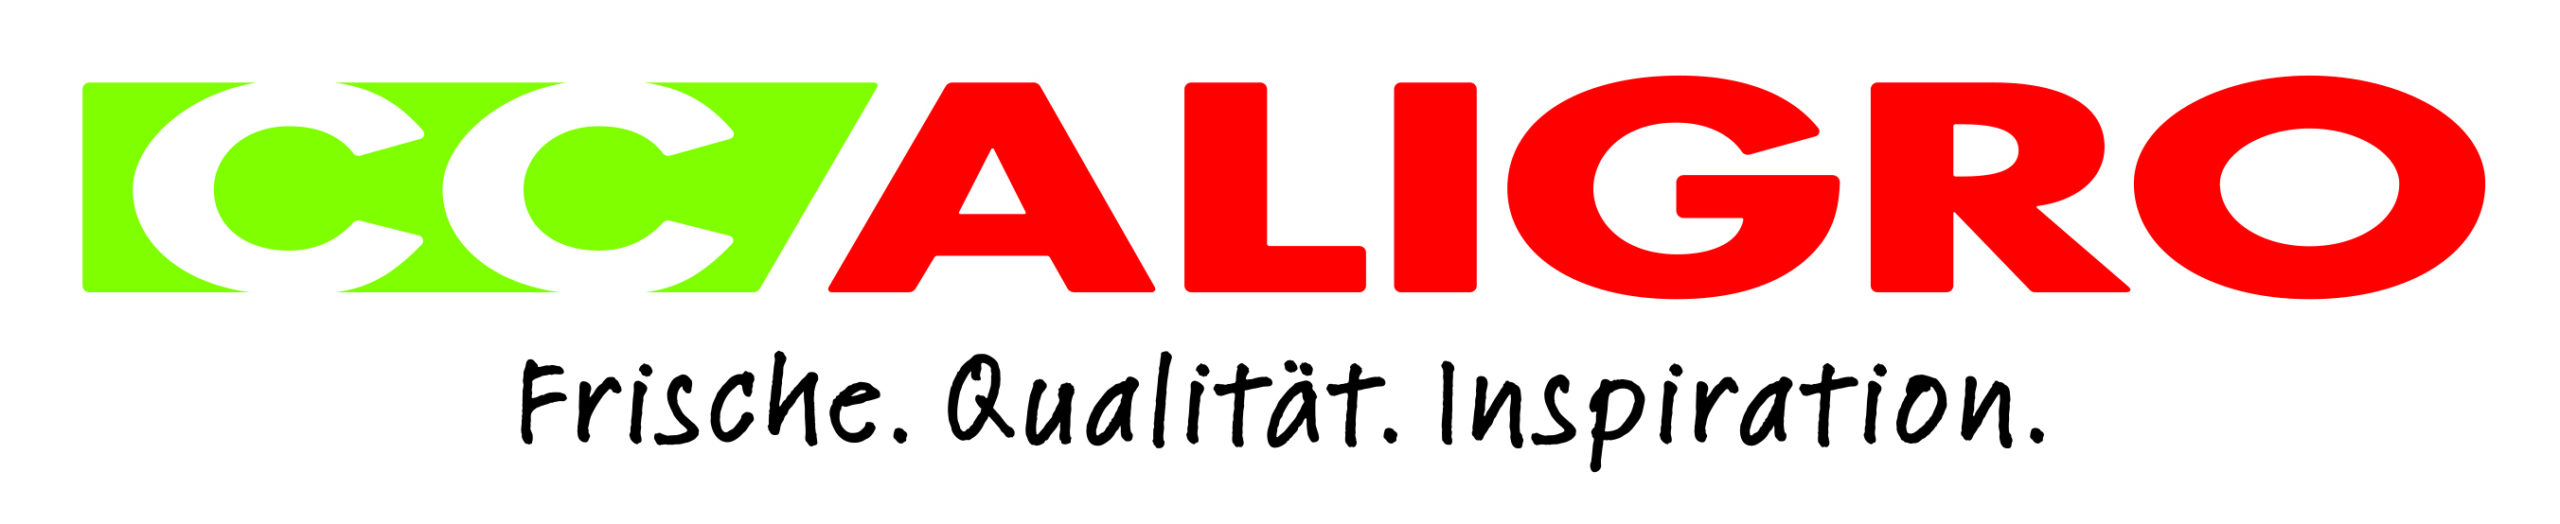 CCALIGRO Logo mit Claim, CMYK